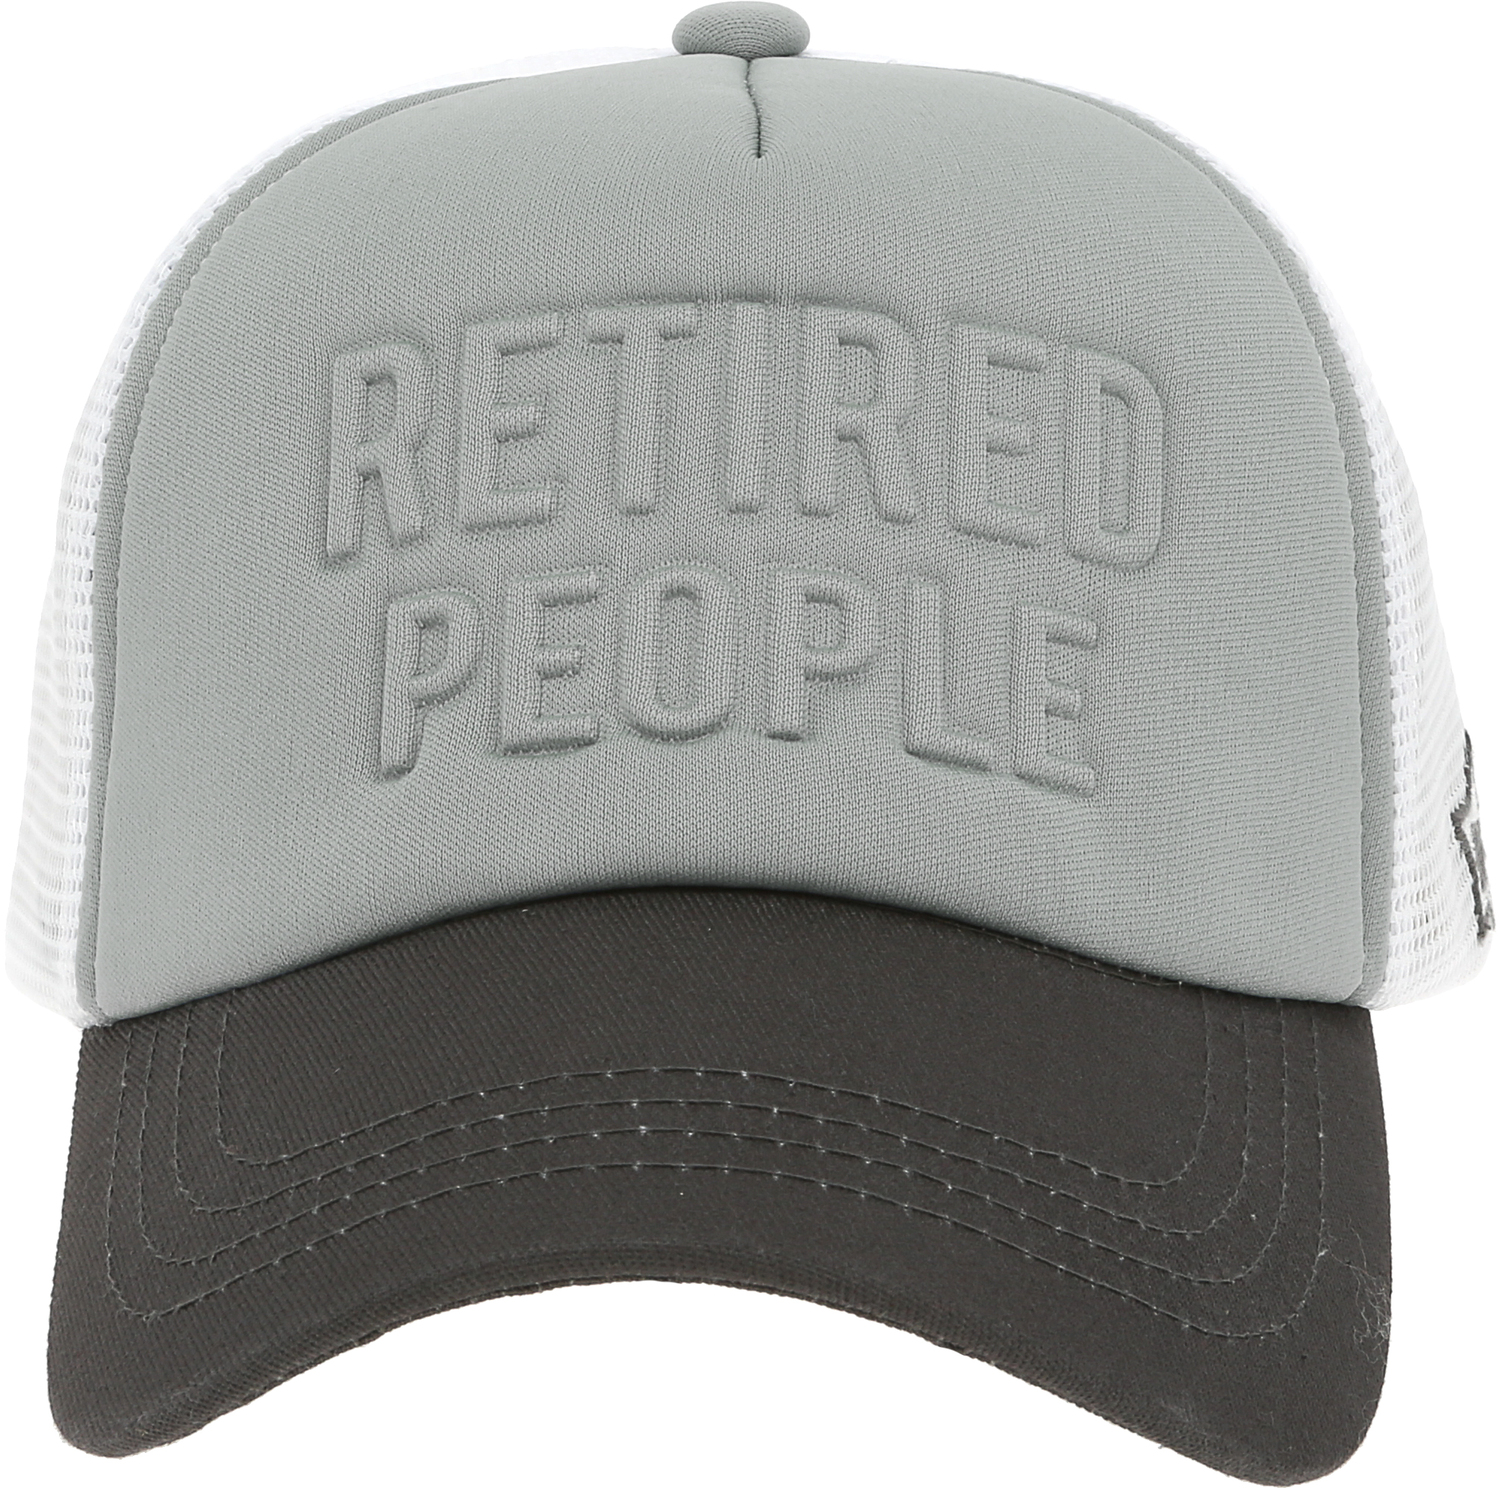 Retired People by We People - Retired People - Adjustable Light Gray Neoprene Mesh Hat